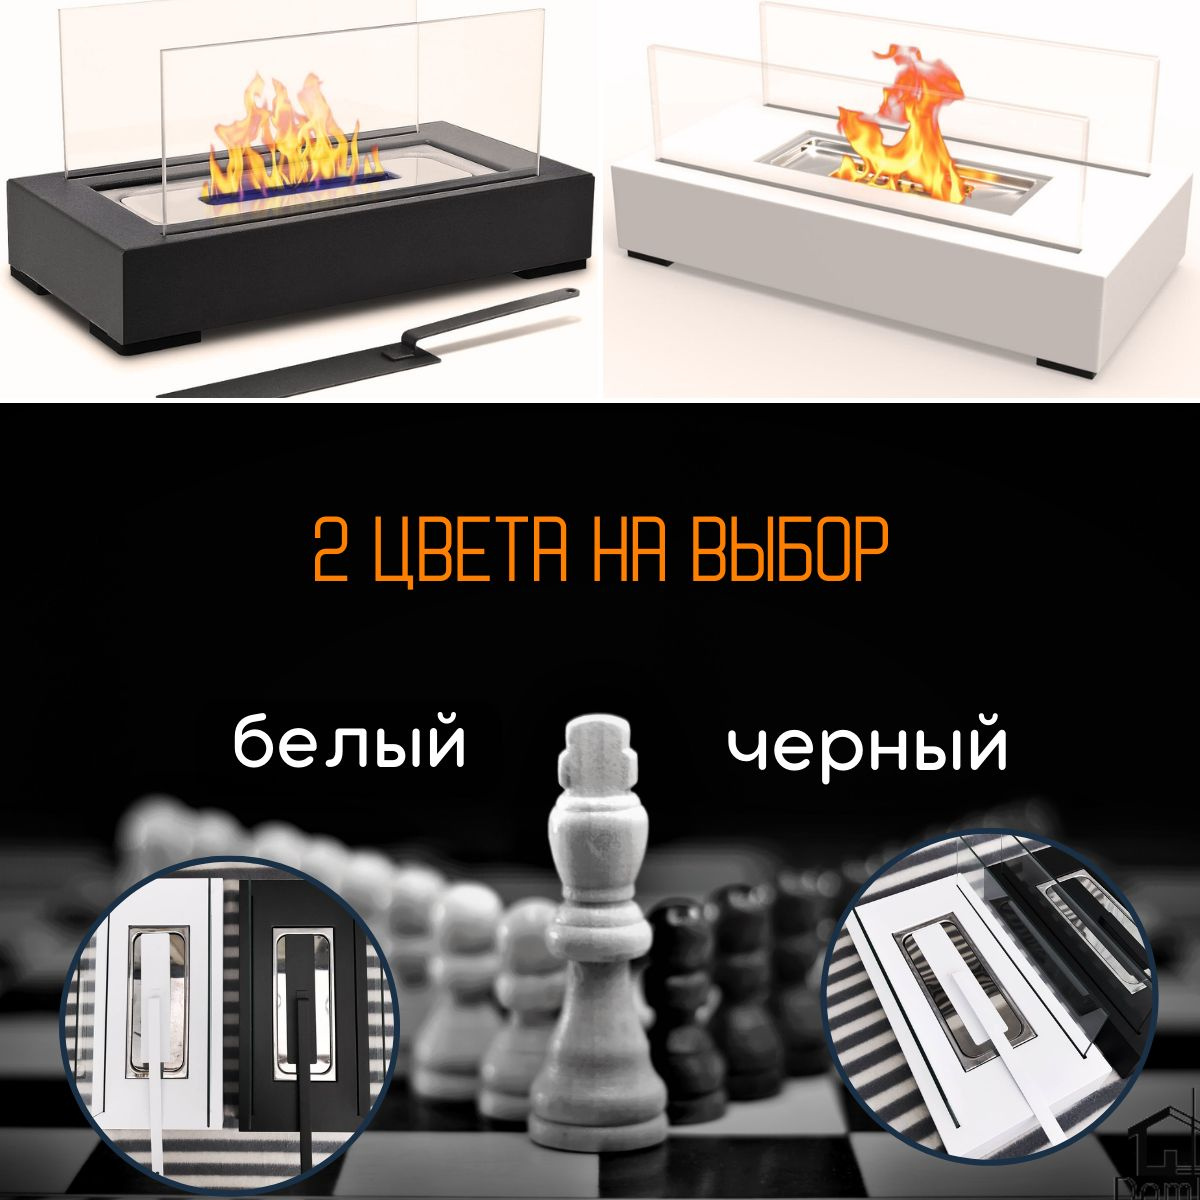 ссылка для перехода в магазин https://www.ozon.ru/seller/domkoba-834418/products/?miniapp=seller_834418 